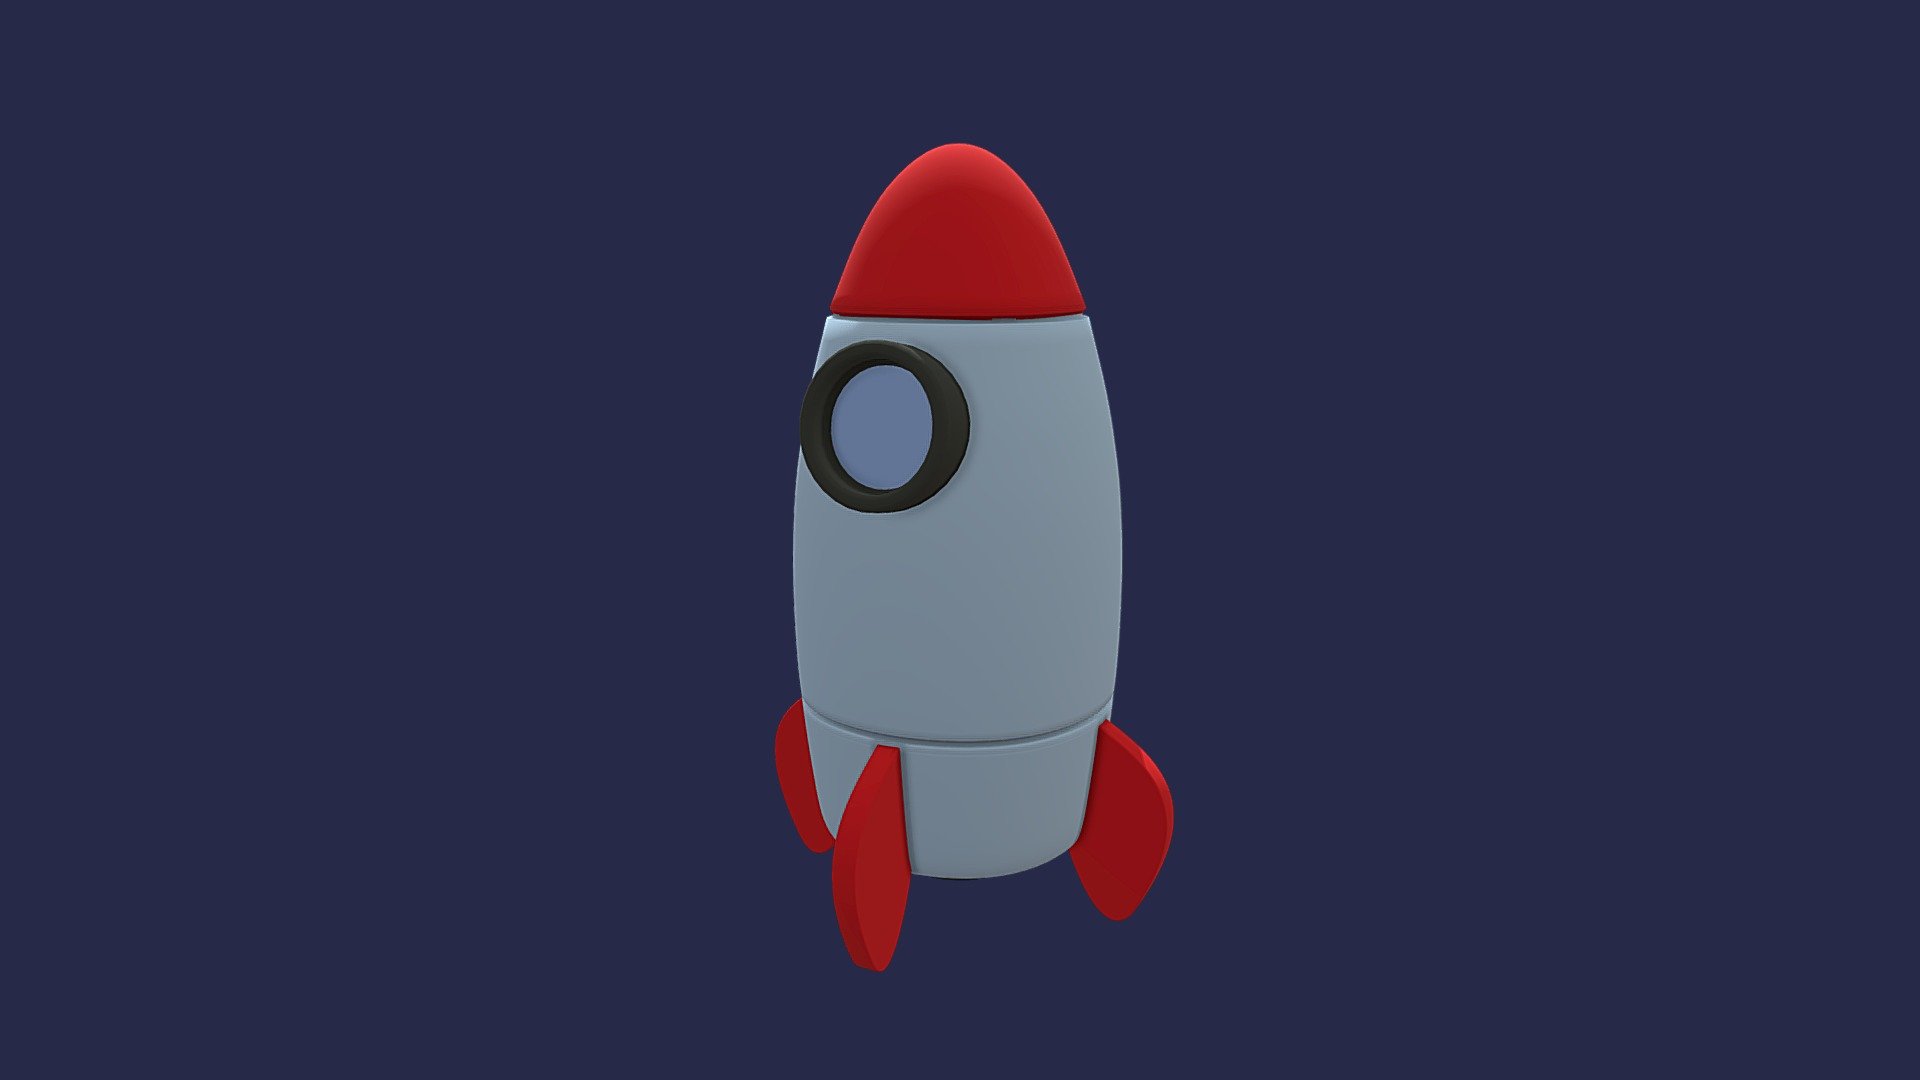 Cartoon Rocket 
* modeled in blender
* &ldquo;textured